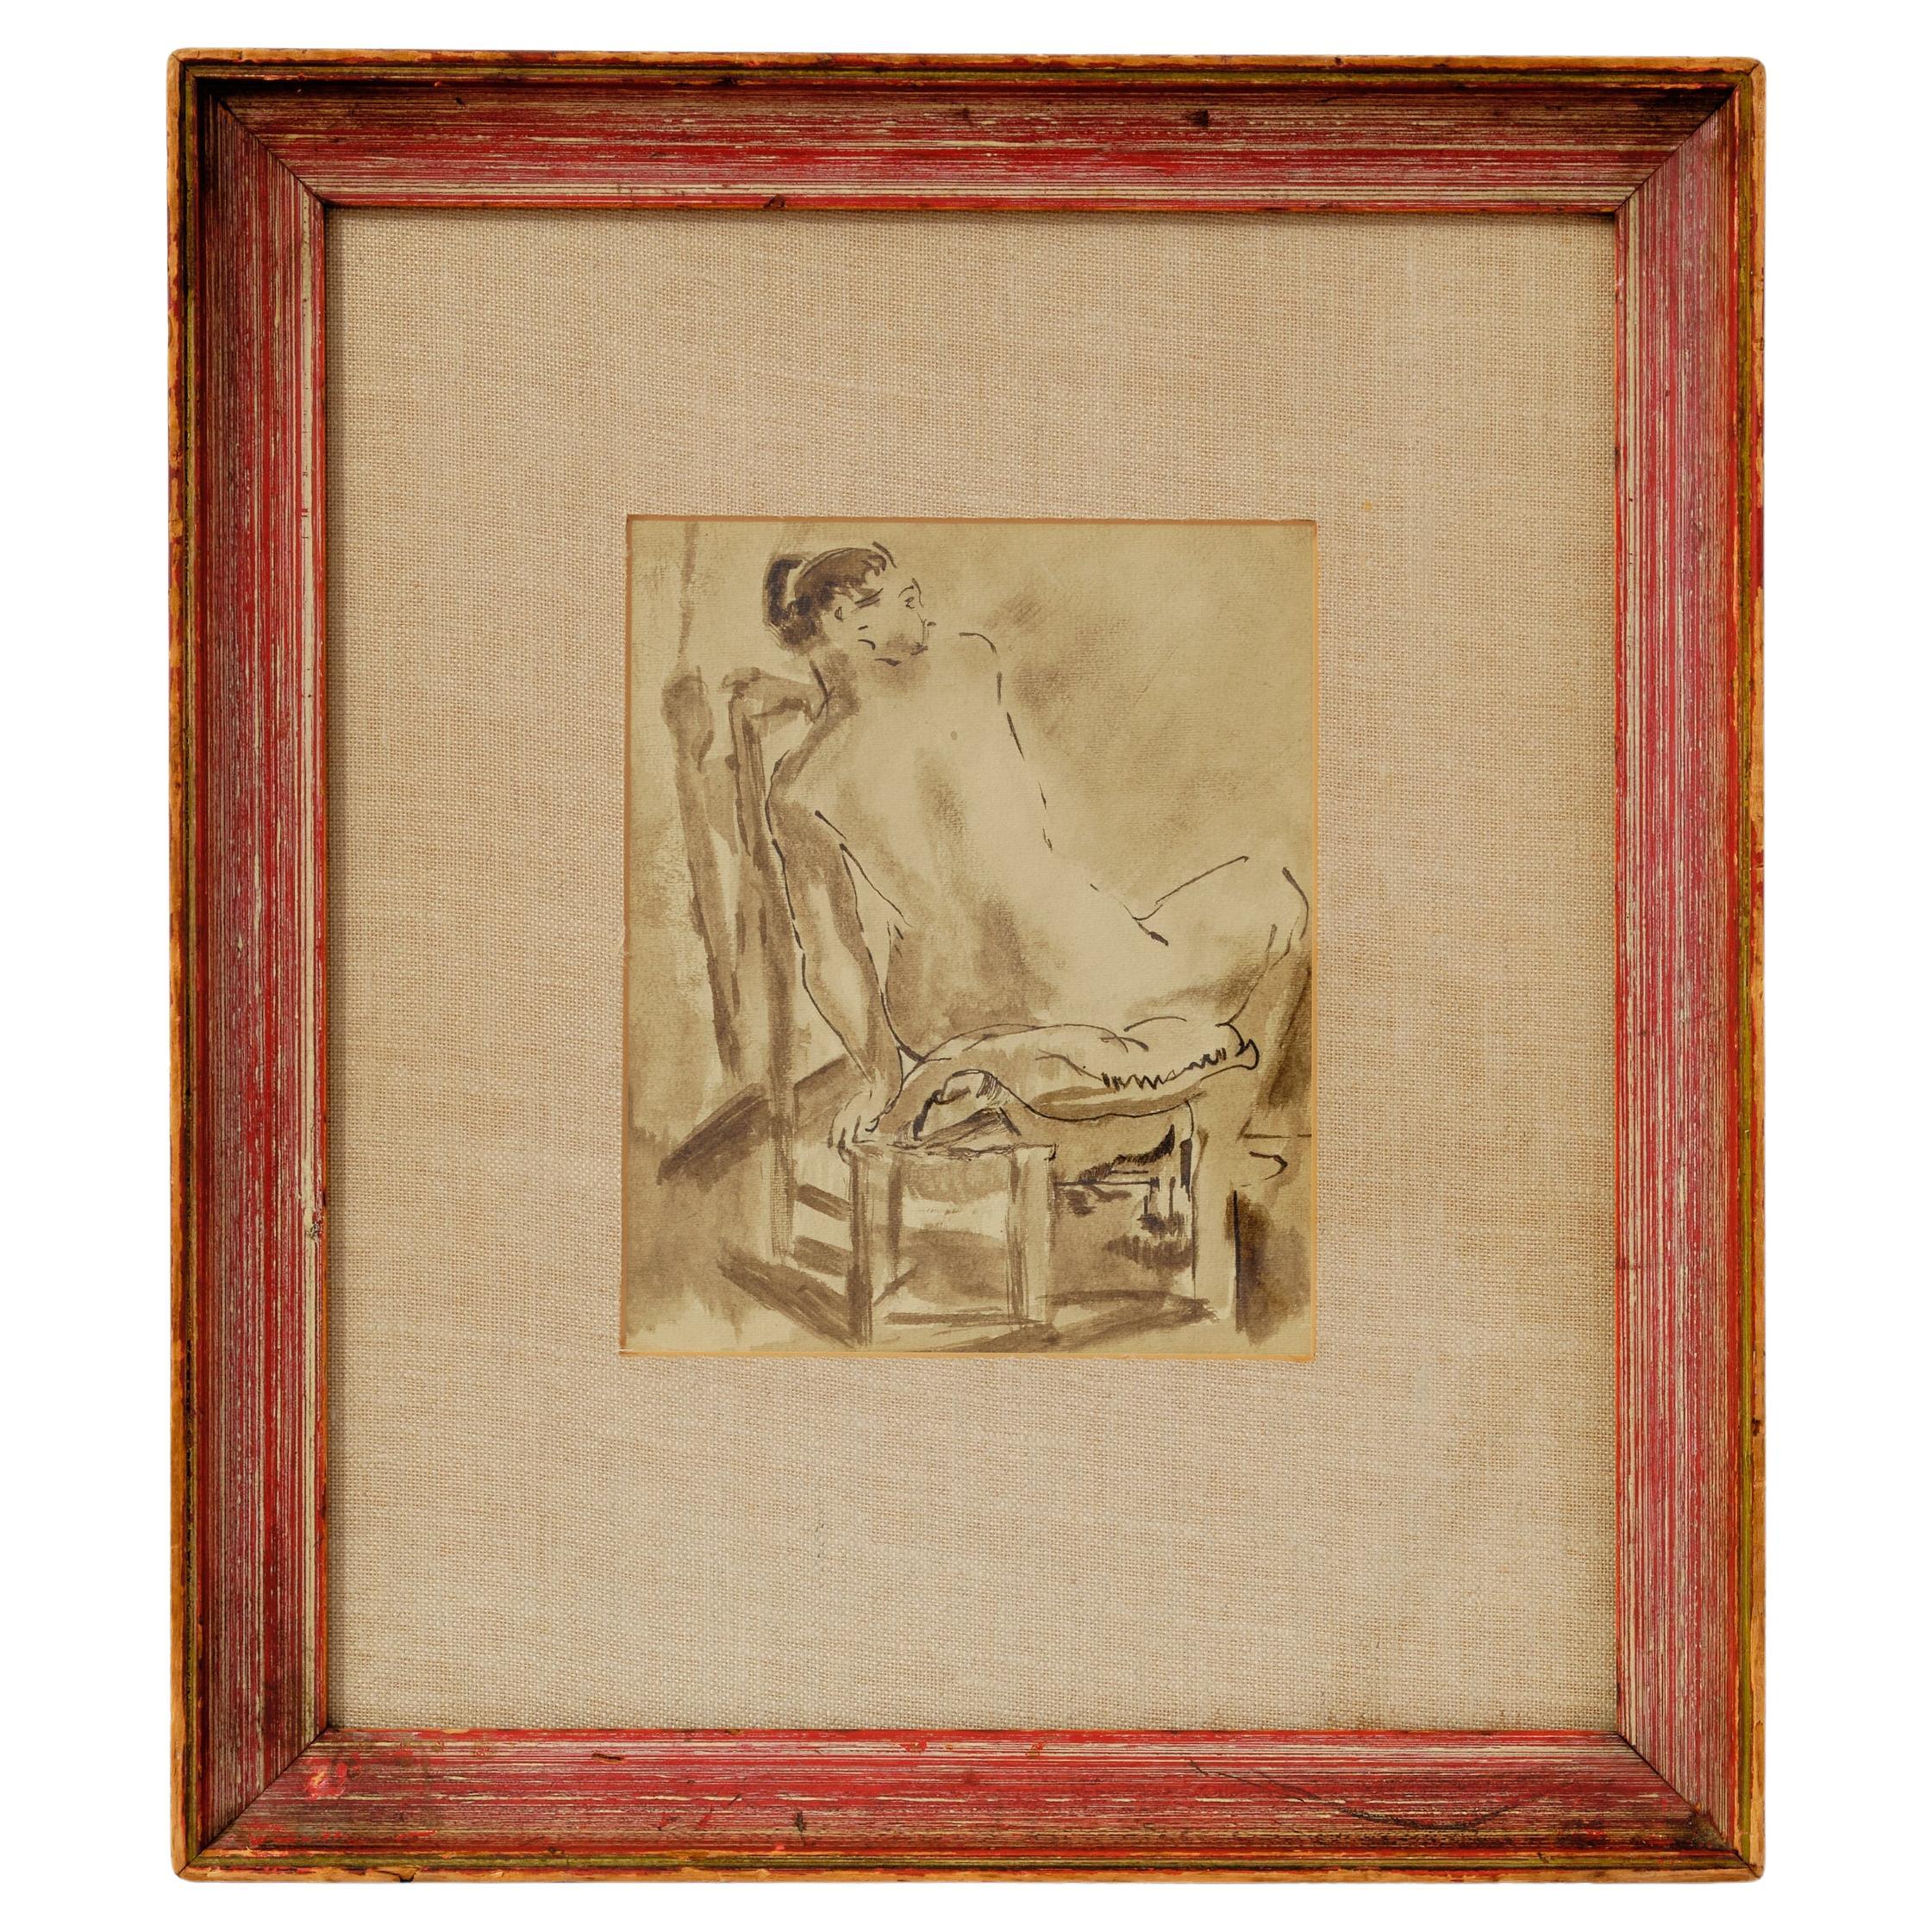 Nude Painting, Ink Wash, C 1950, Back View, Wood Frame, Original Framing